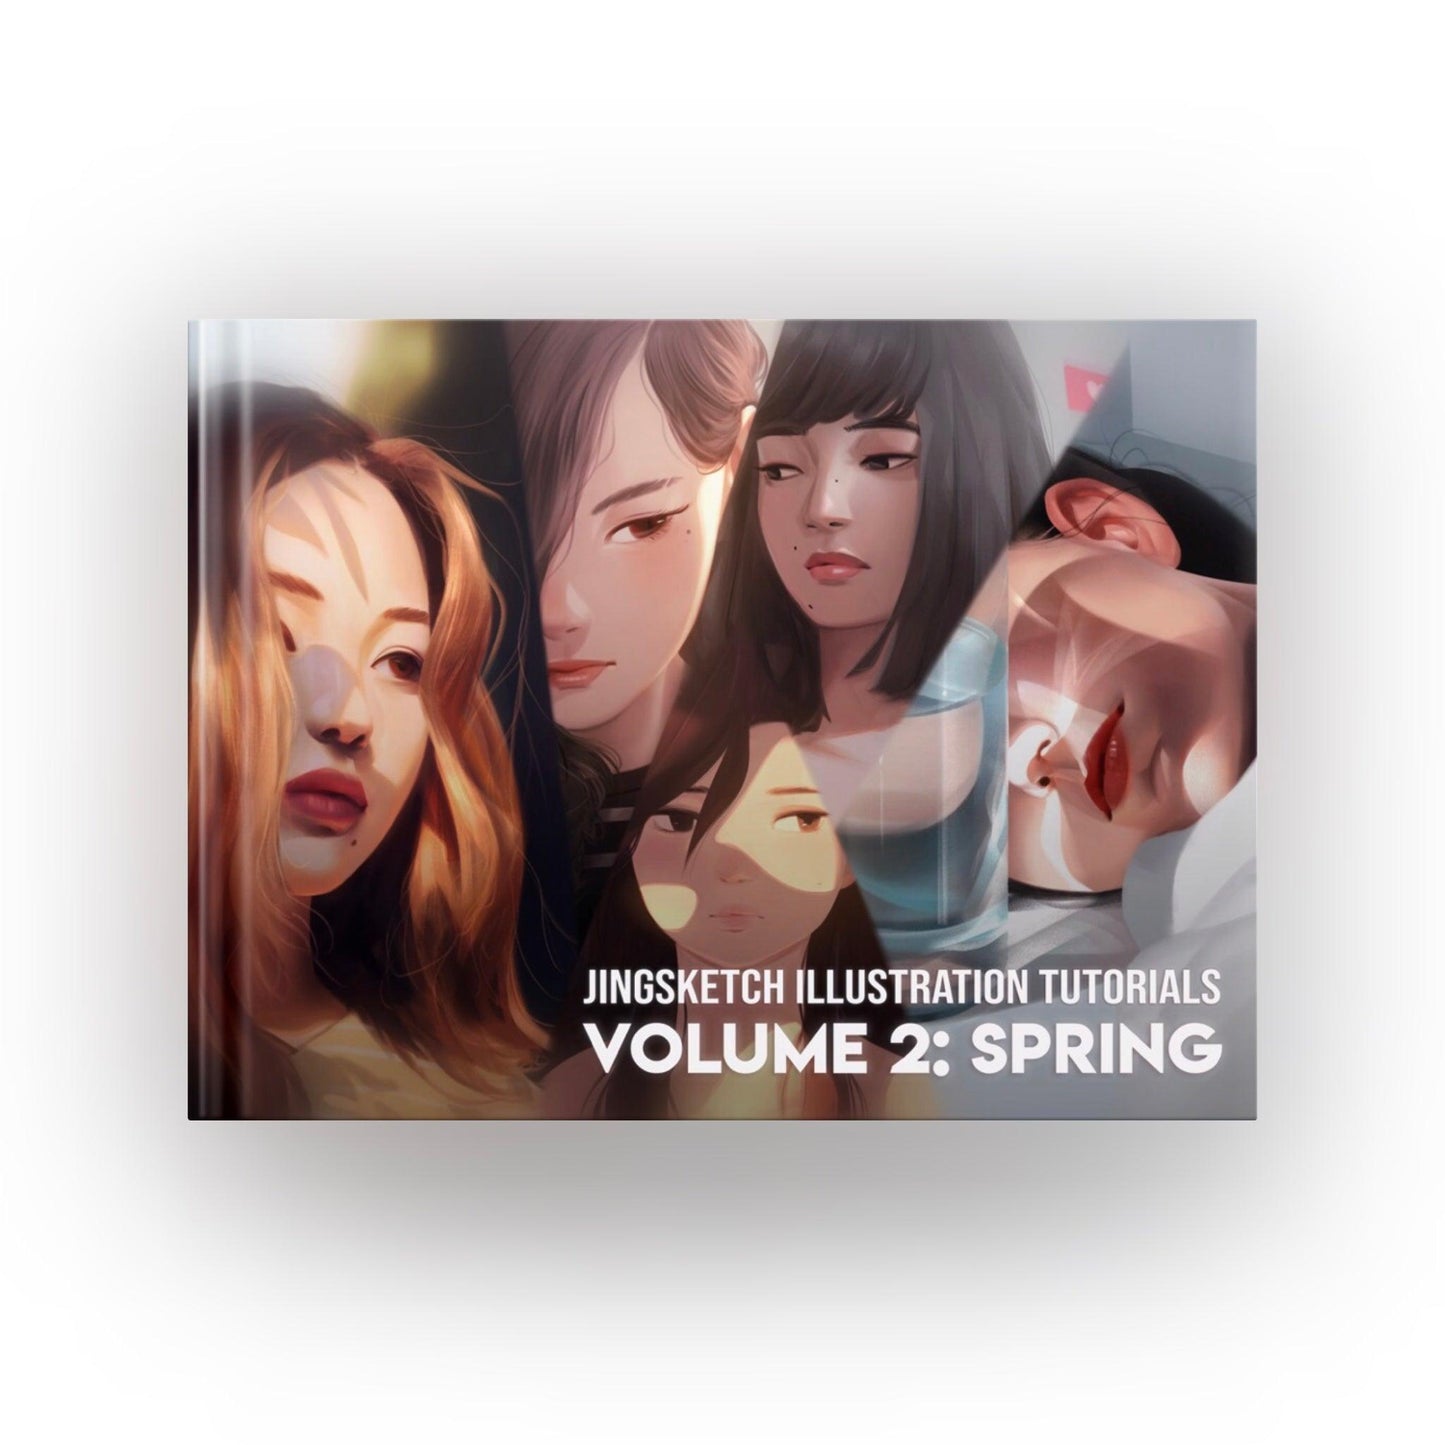 Jingsketch Tutorials Volume 2: Spring - Jingsketch